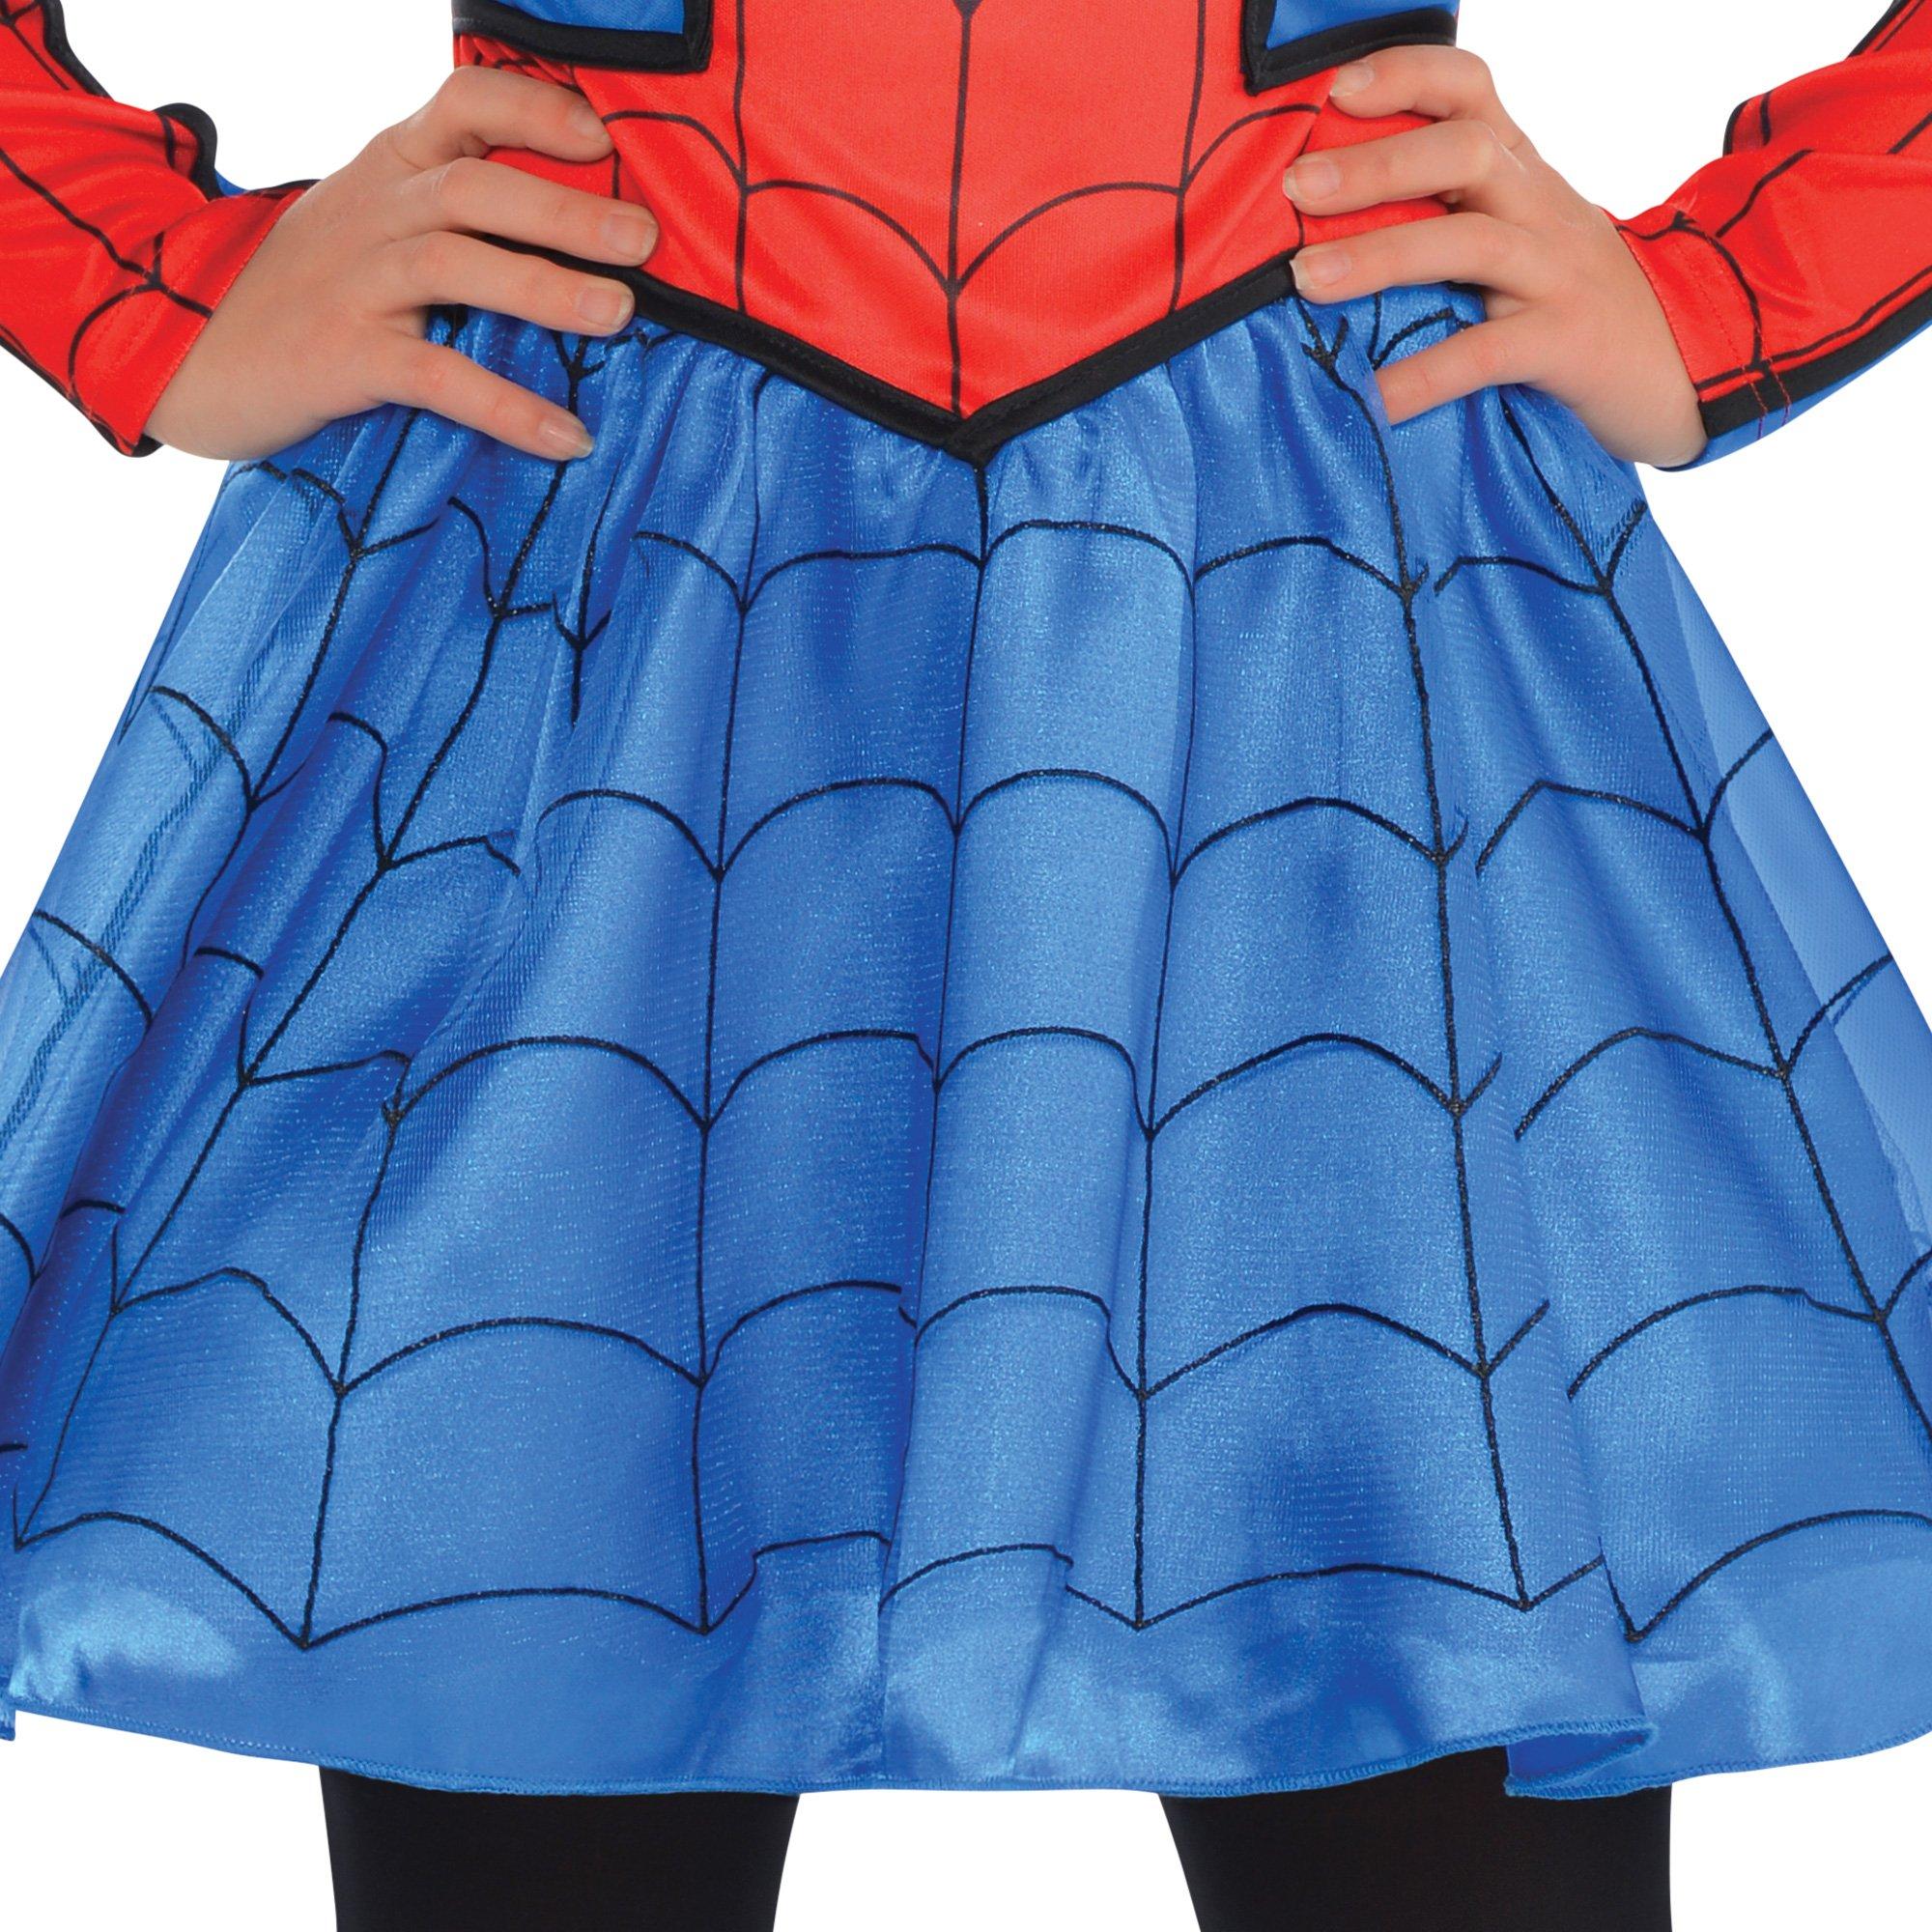 Girls Red Spider-Girl Costume